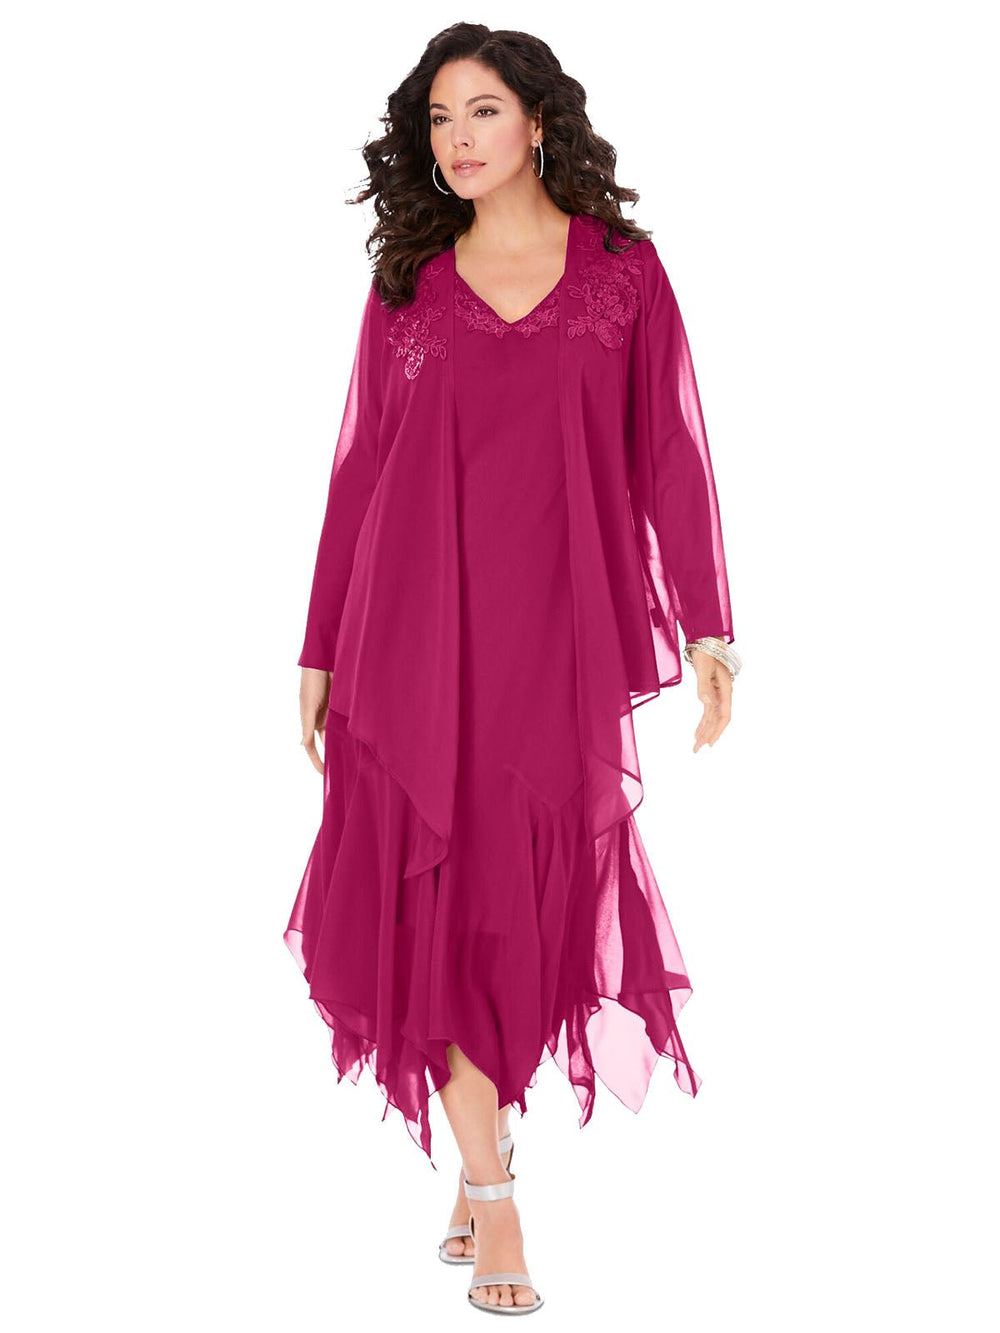 Plus Size Beaded Embellished Hanky Hem Dress & Jacket Set in Berry - Curvy Chic Boutique